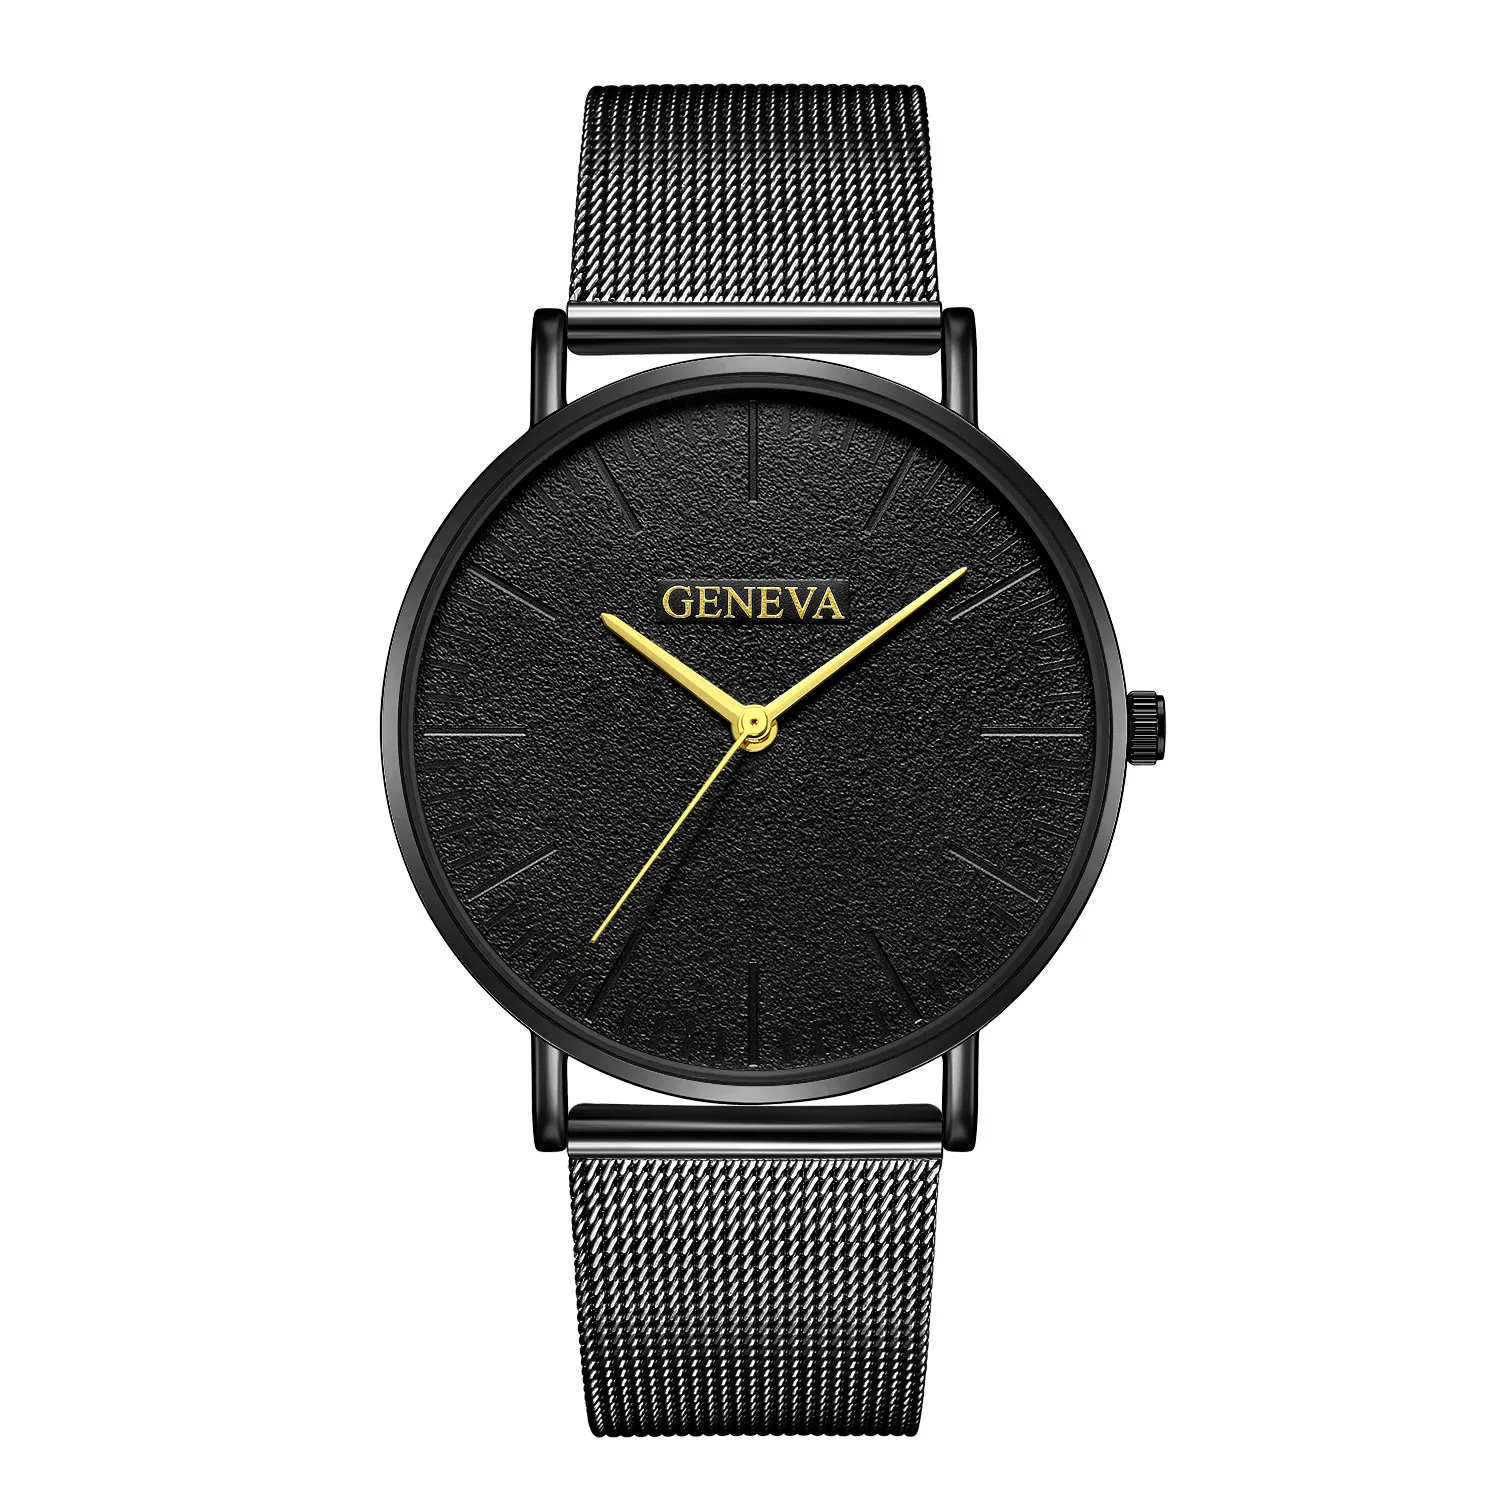 Waches Women New Casual Luxury Stainless Steel Band Quartz Analog Wrist Watch reloj pulsera mujer bayan saat horloge dames